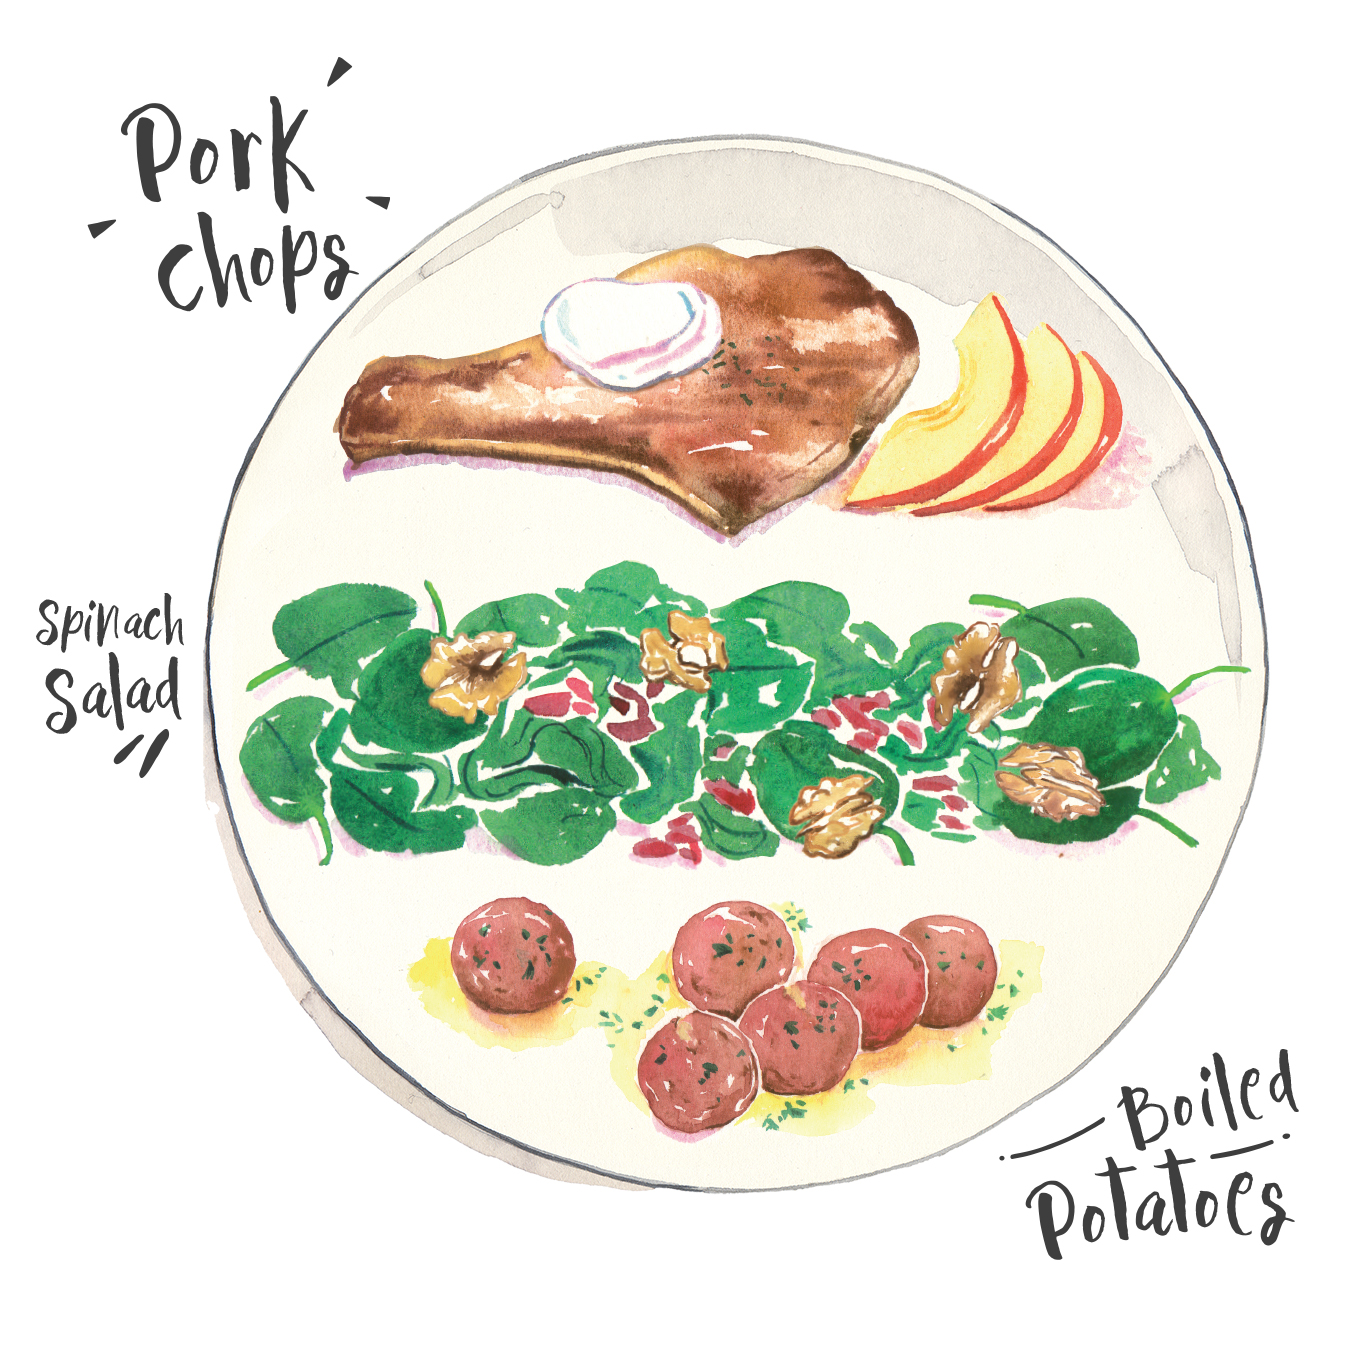 pork chops-spinach salad-boiled potatoes.jpg